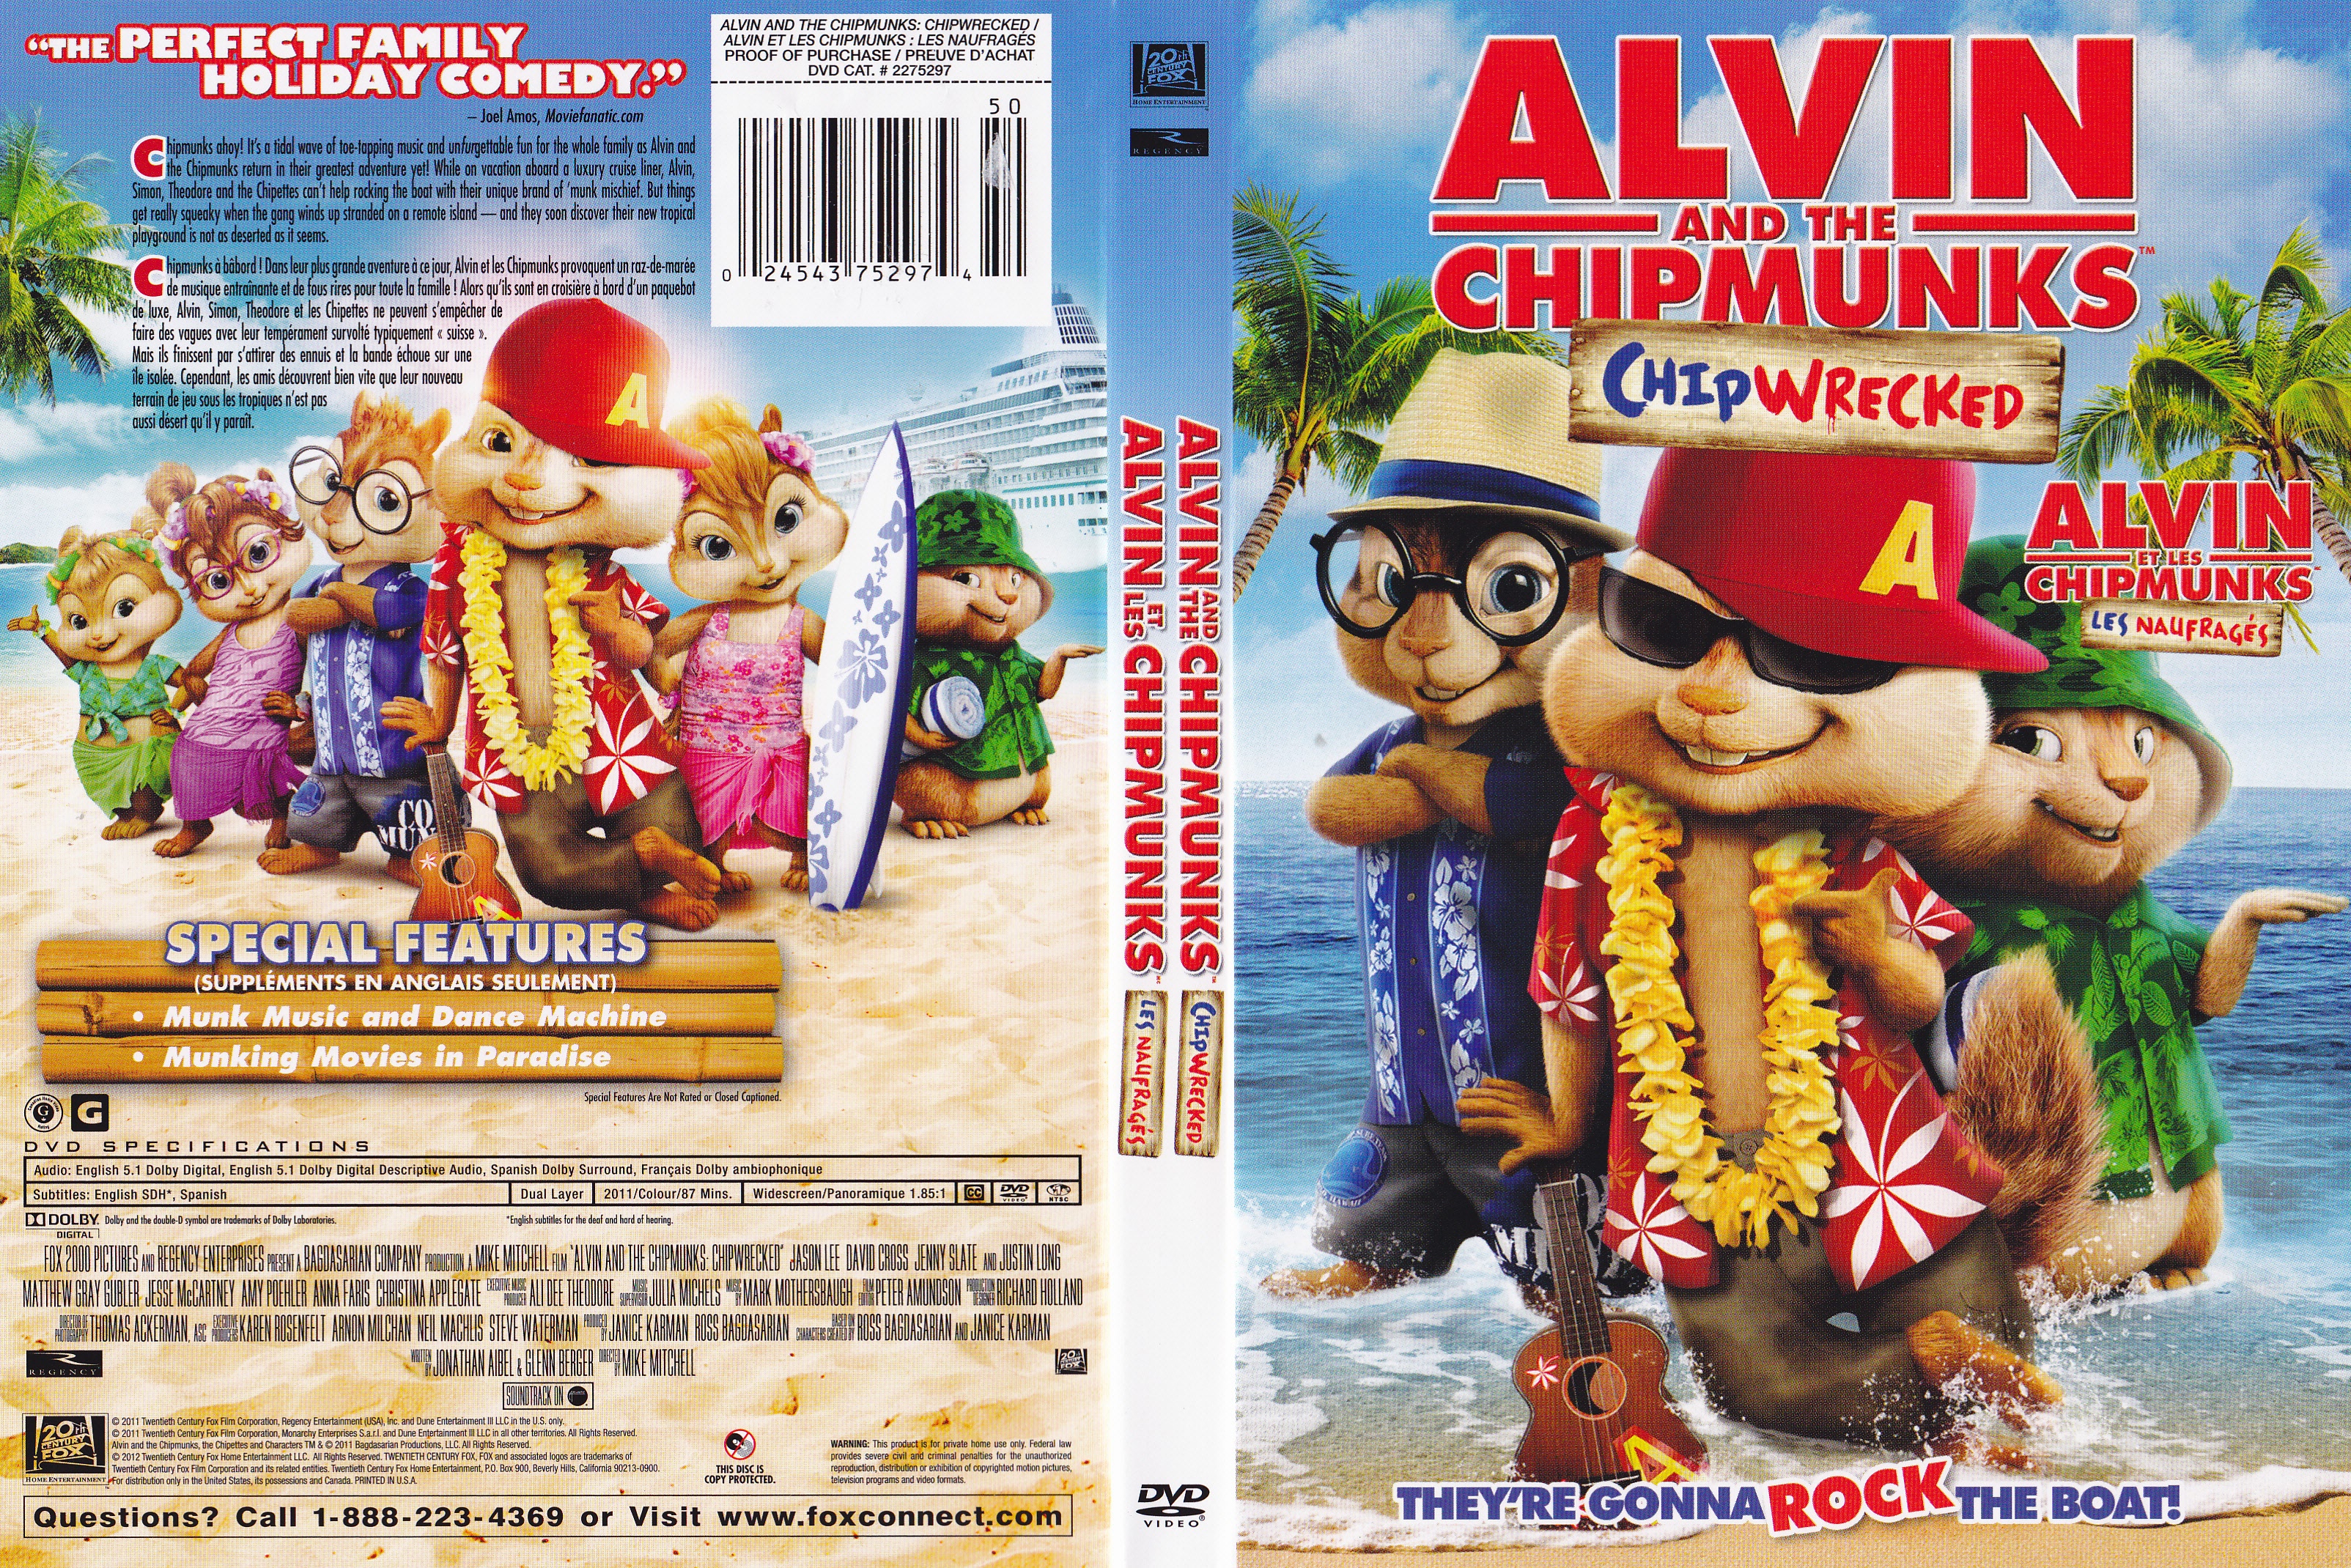 Jaquette DVD Alvin and the chipmunks chip wreckep - Alvin et les chipmunks les naufrags (Canadienne)